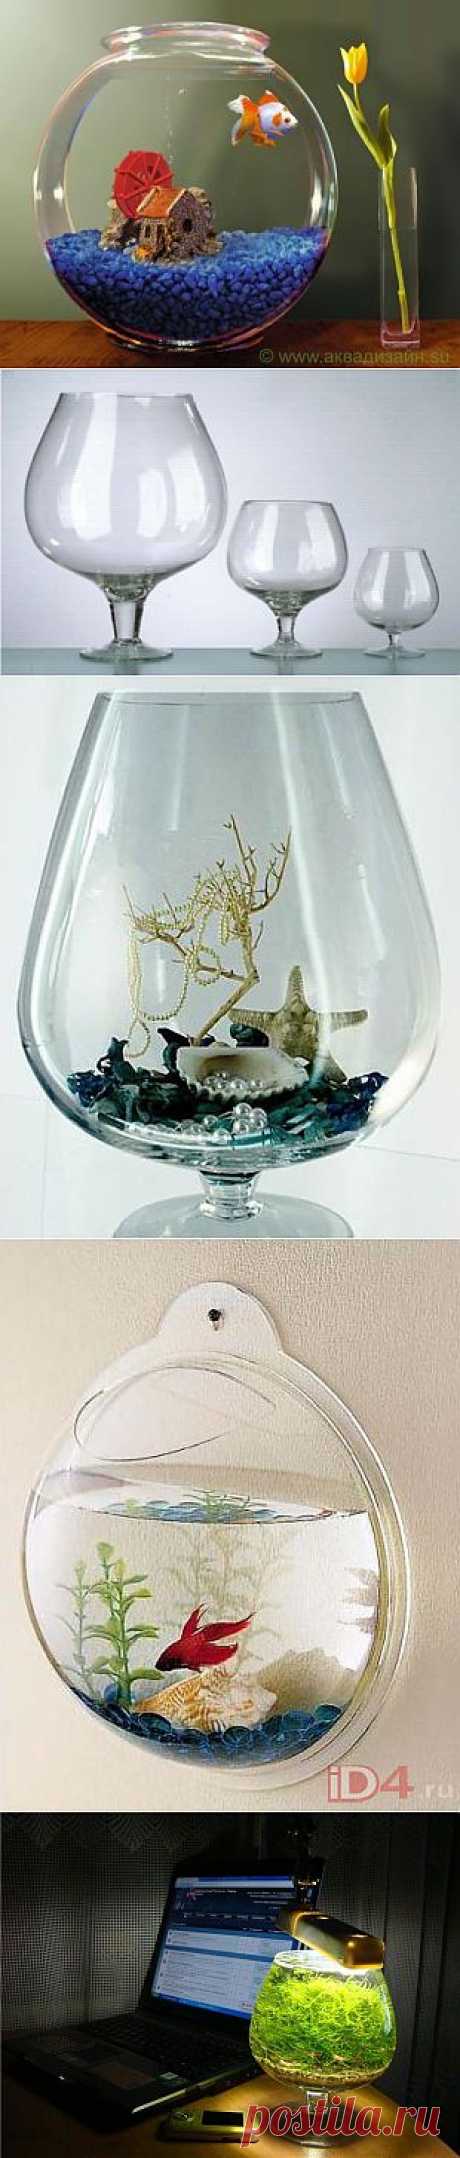 Мини аквариум из вазы.